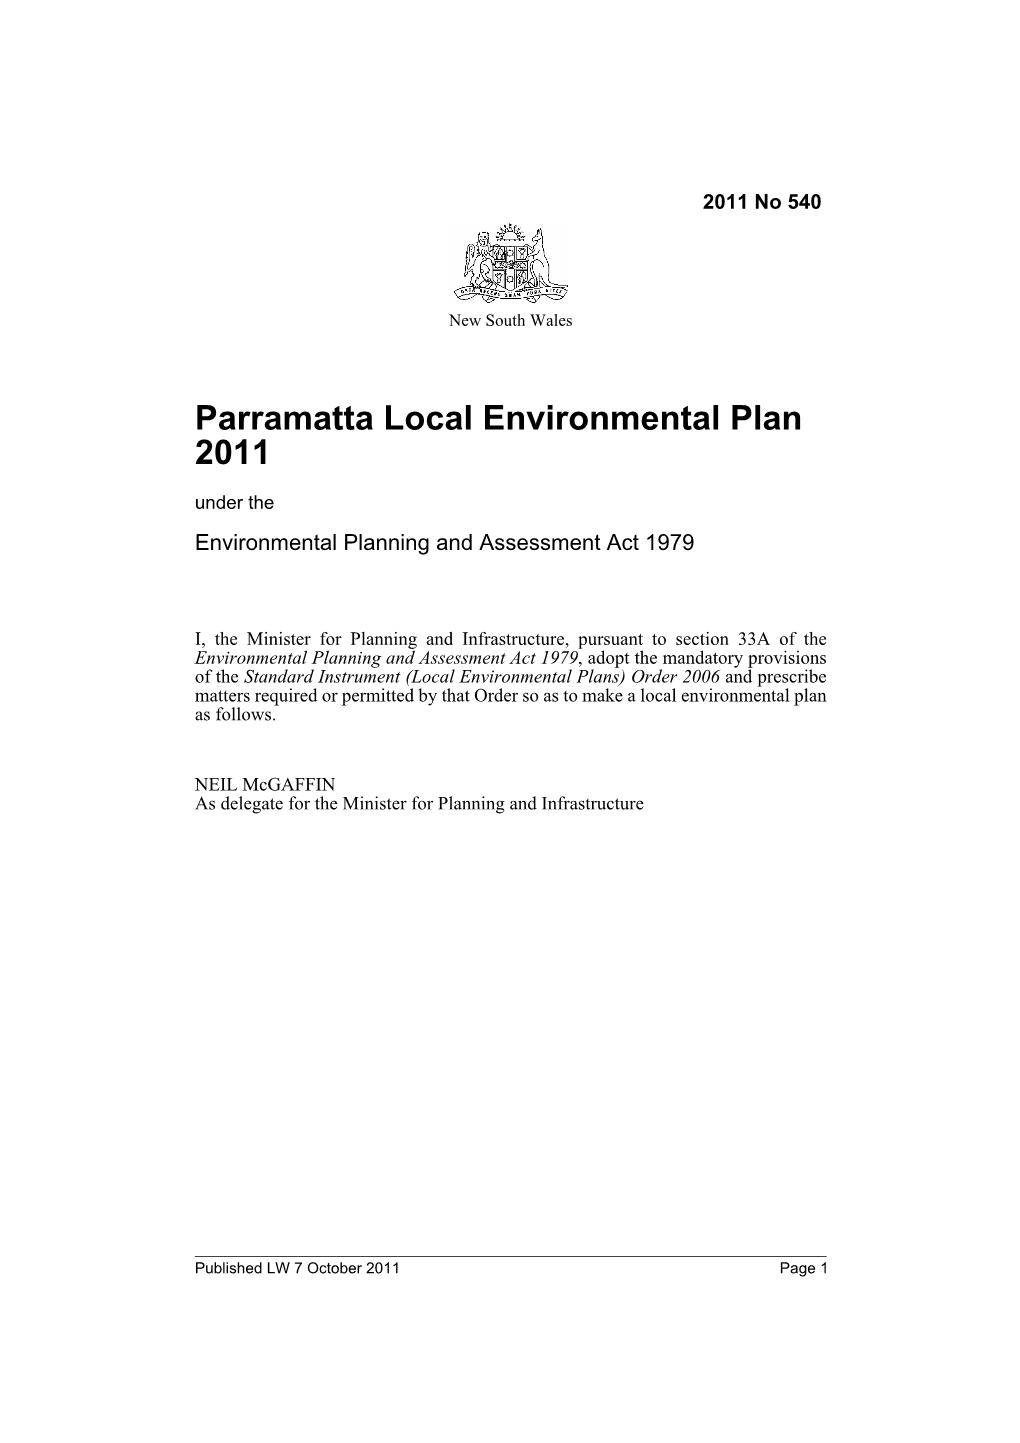 Parramatta Local Environmental Plan 2011 Under the Environmental Planning and Assessment Act 1979